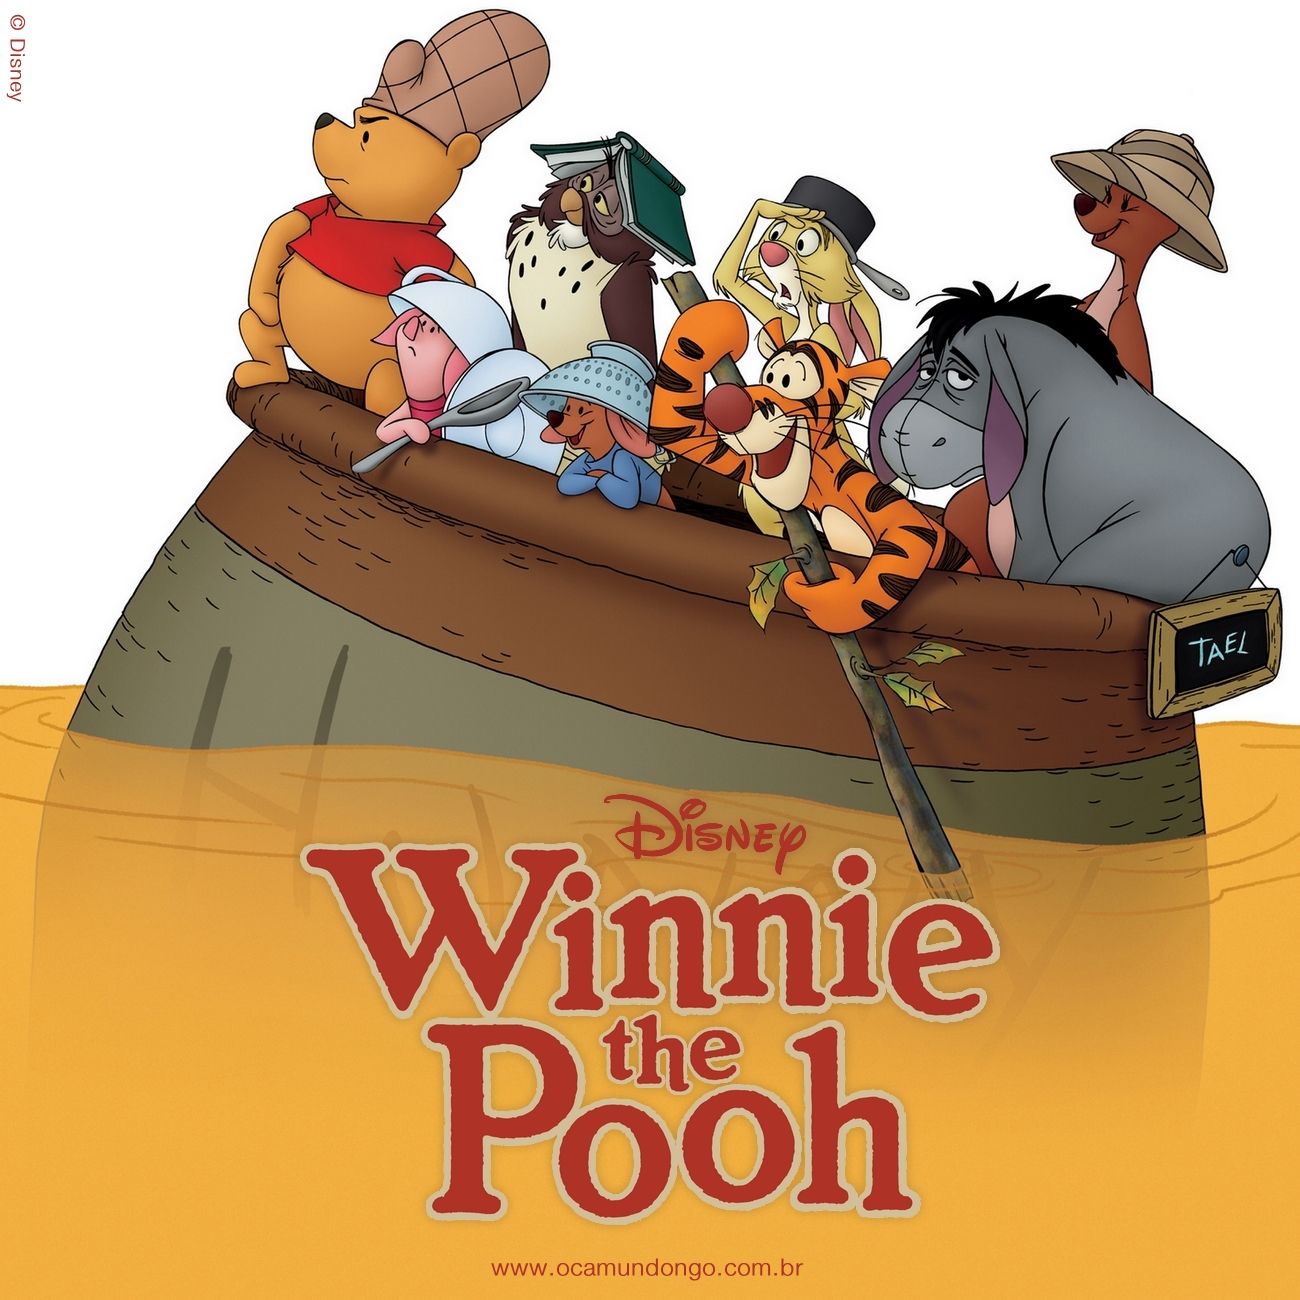 winnie-the-pooh-atores-inicio-camundongo